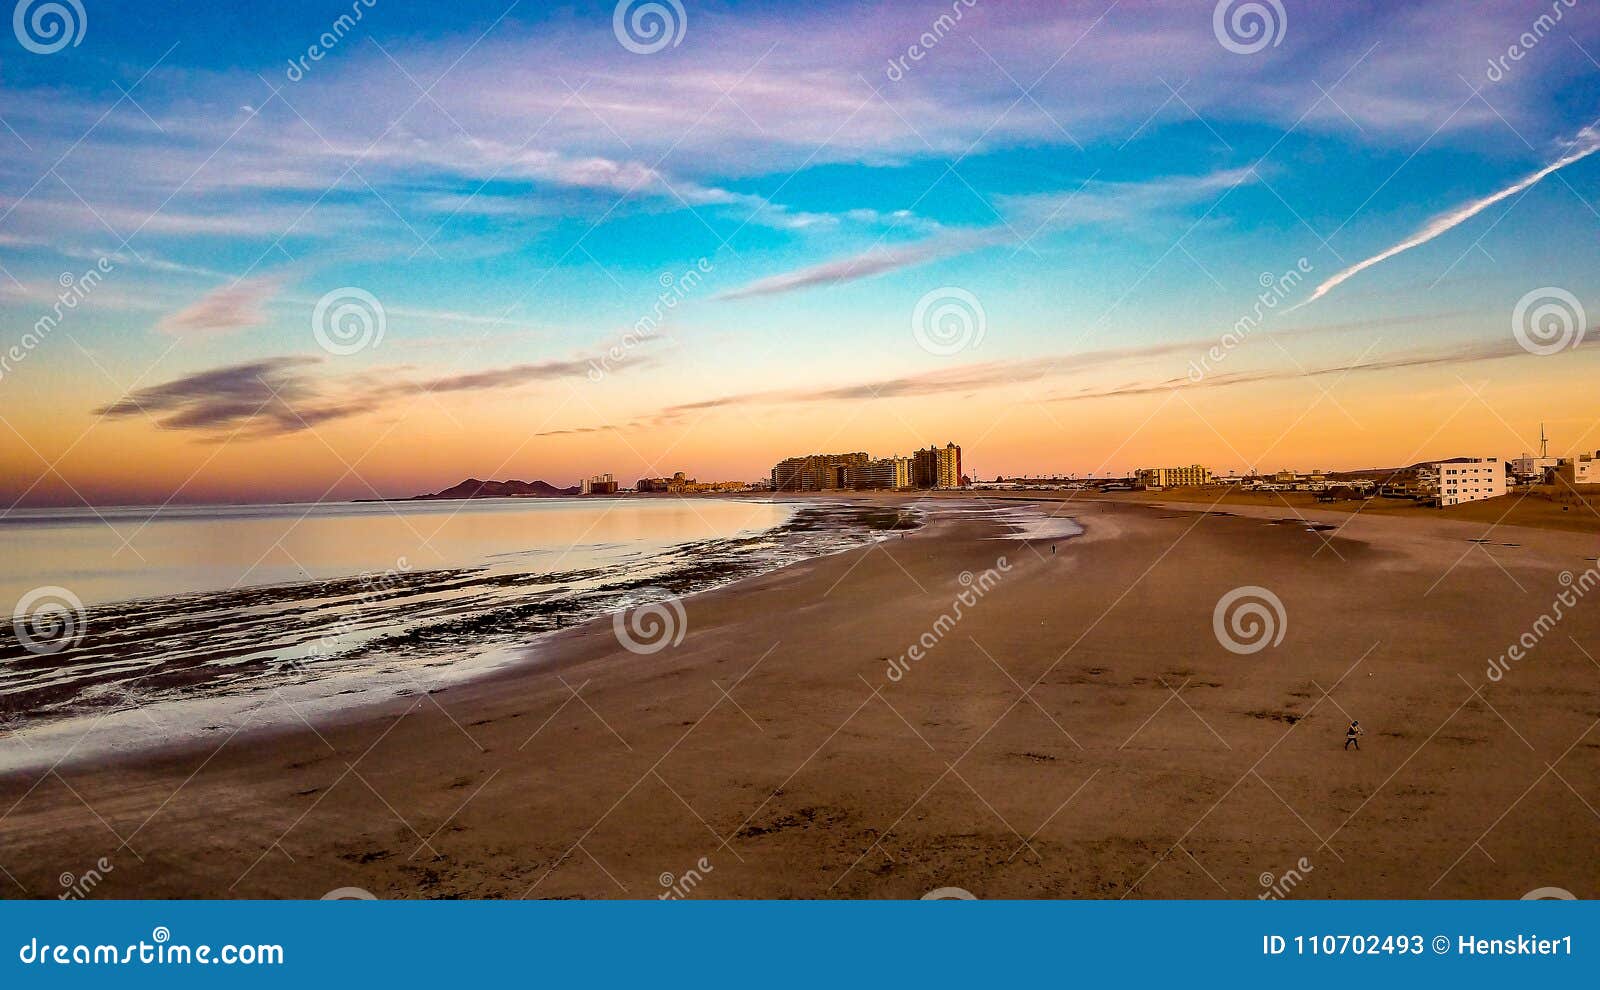 sunrise on the horizon at sandy beach, puerto penasco, mexico